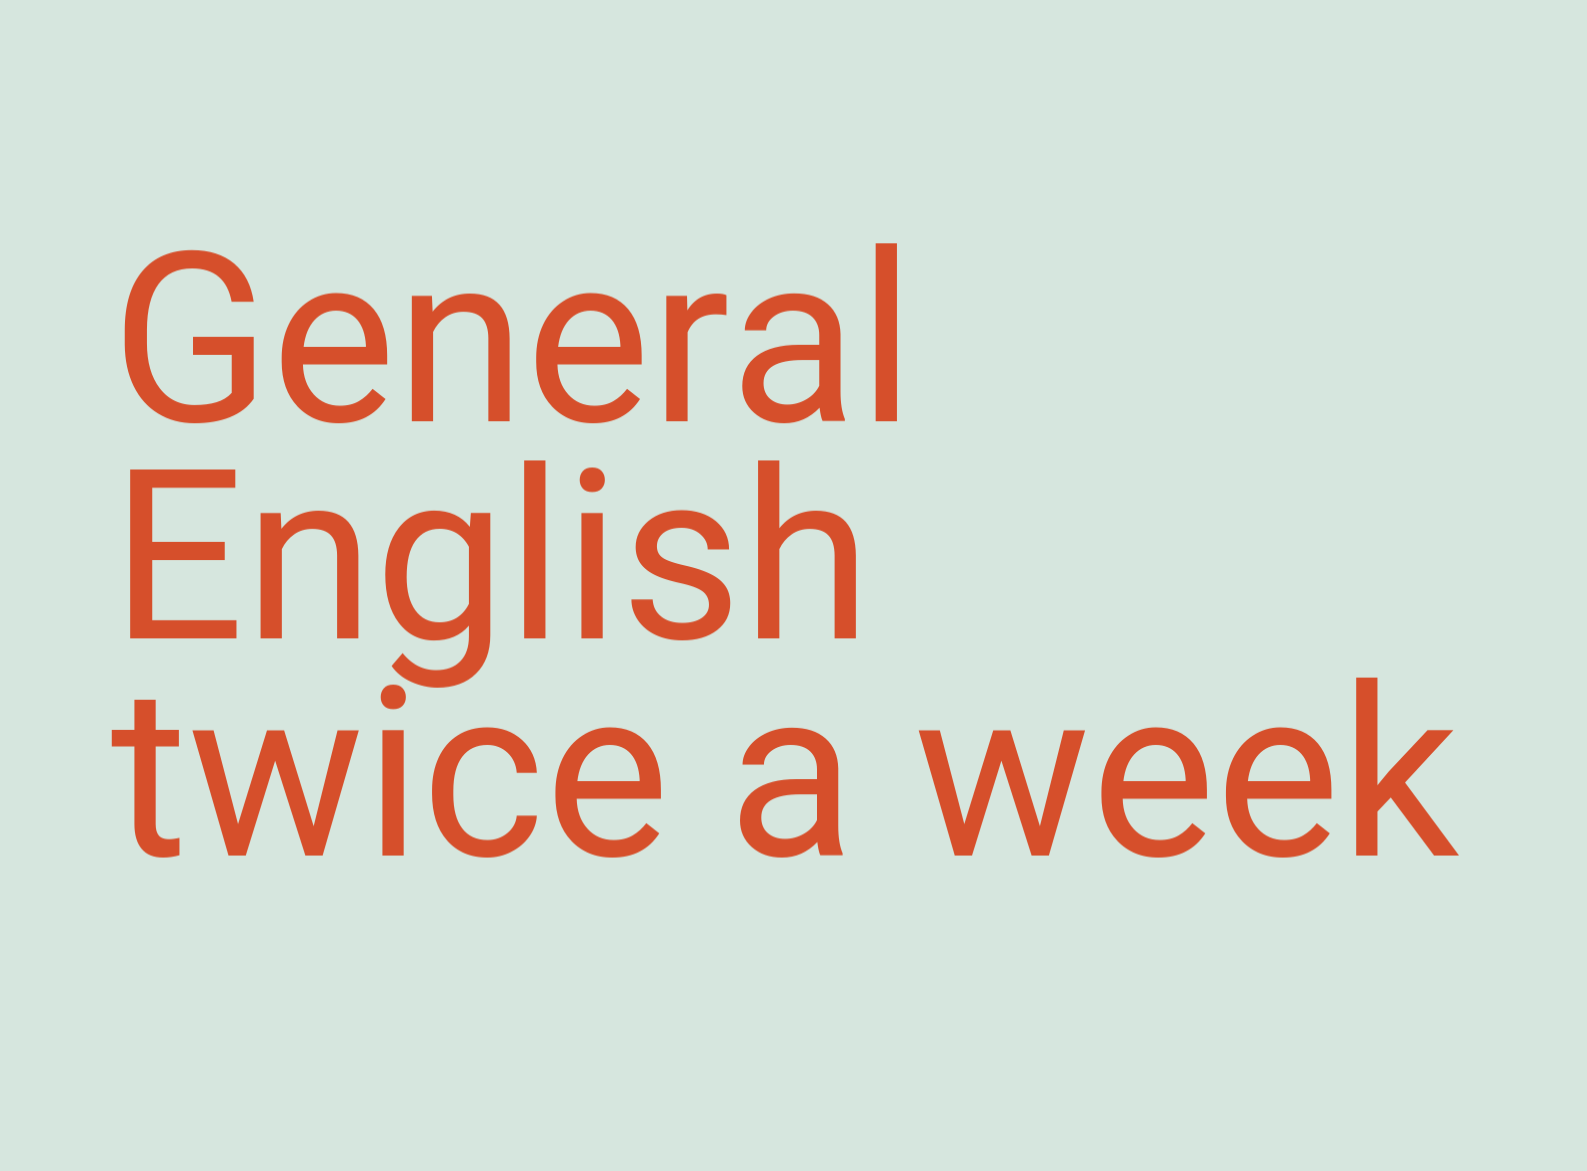 General English twice a week